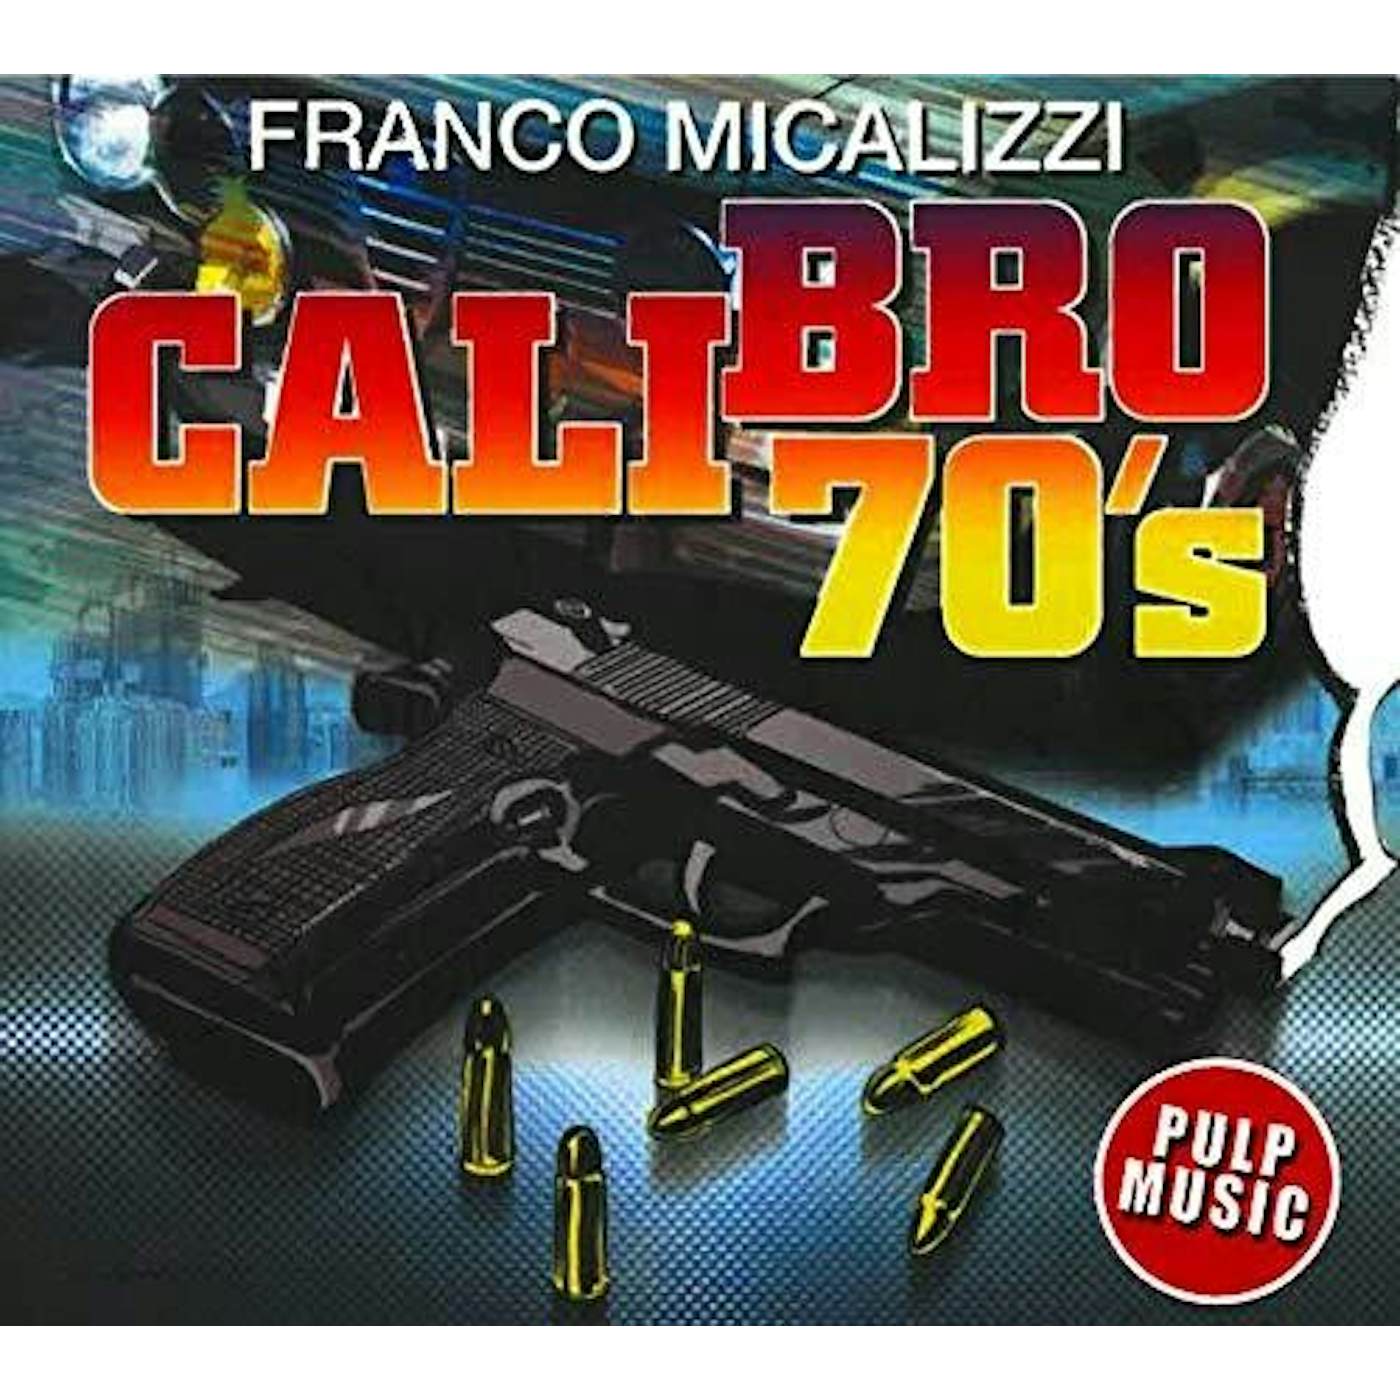 Franco Micalizzi CALIBRO 70'S CD